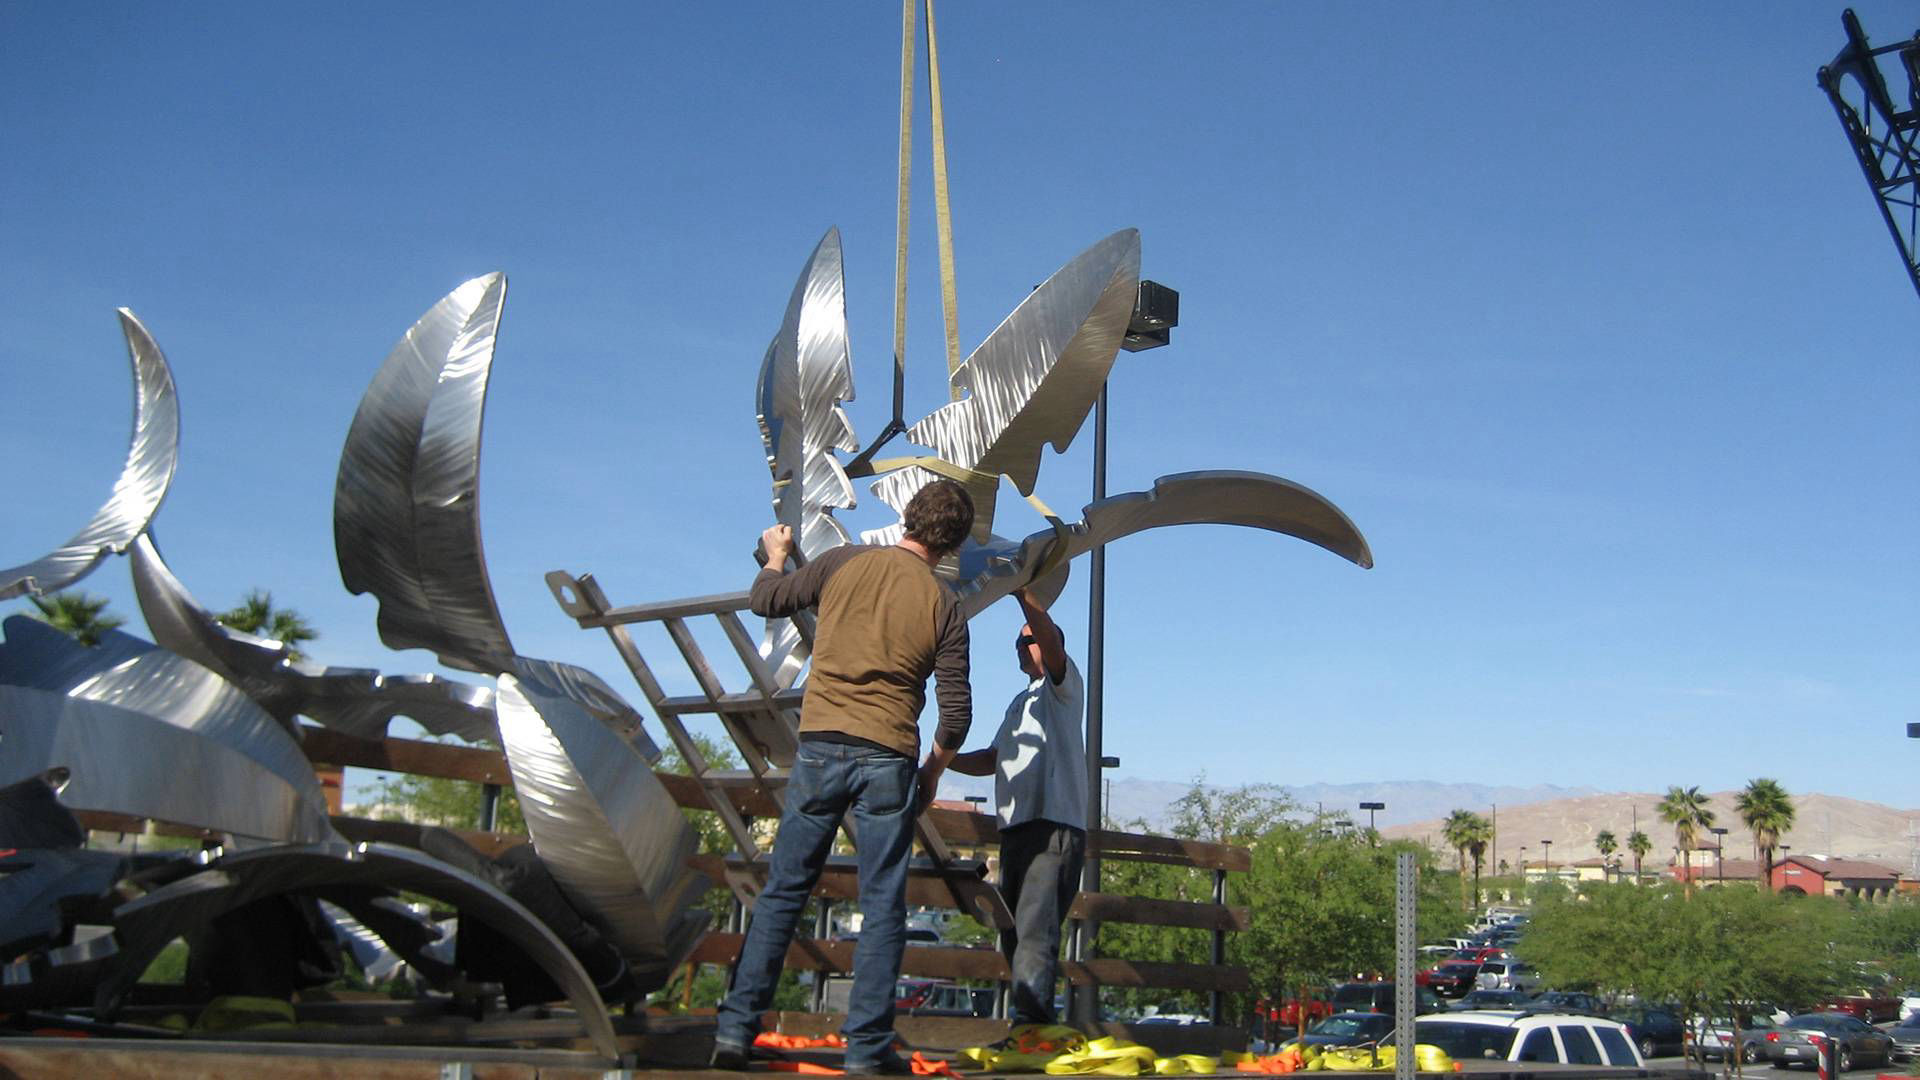 Heath Satow Sculpture - installing Tumbling Weed, a stainless steel public art sculpture in Palm Desert, CA